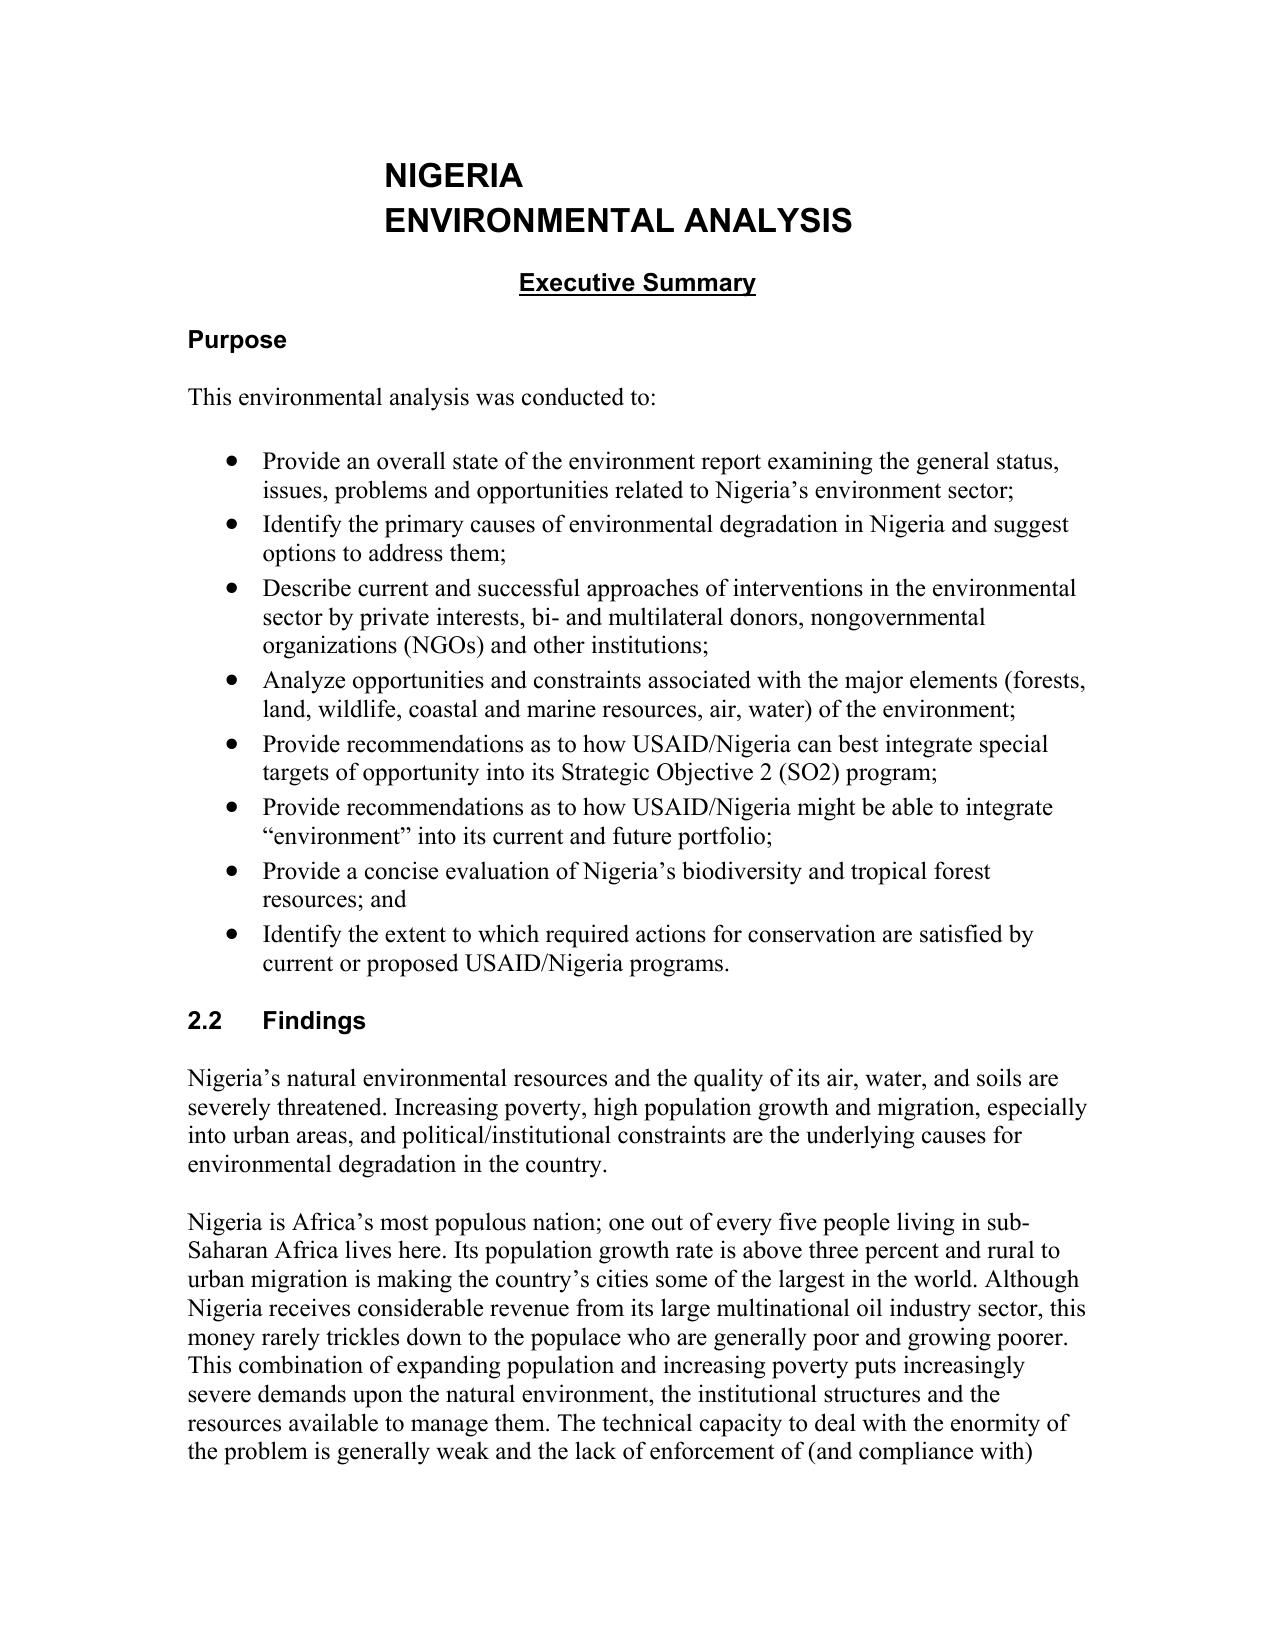 Microsoft Word - NIGERIA Environmental Analysis.doc